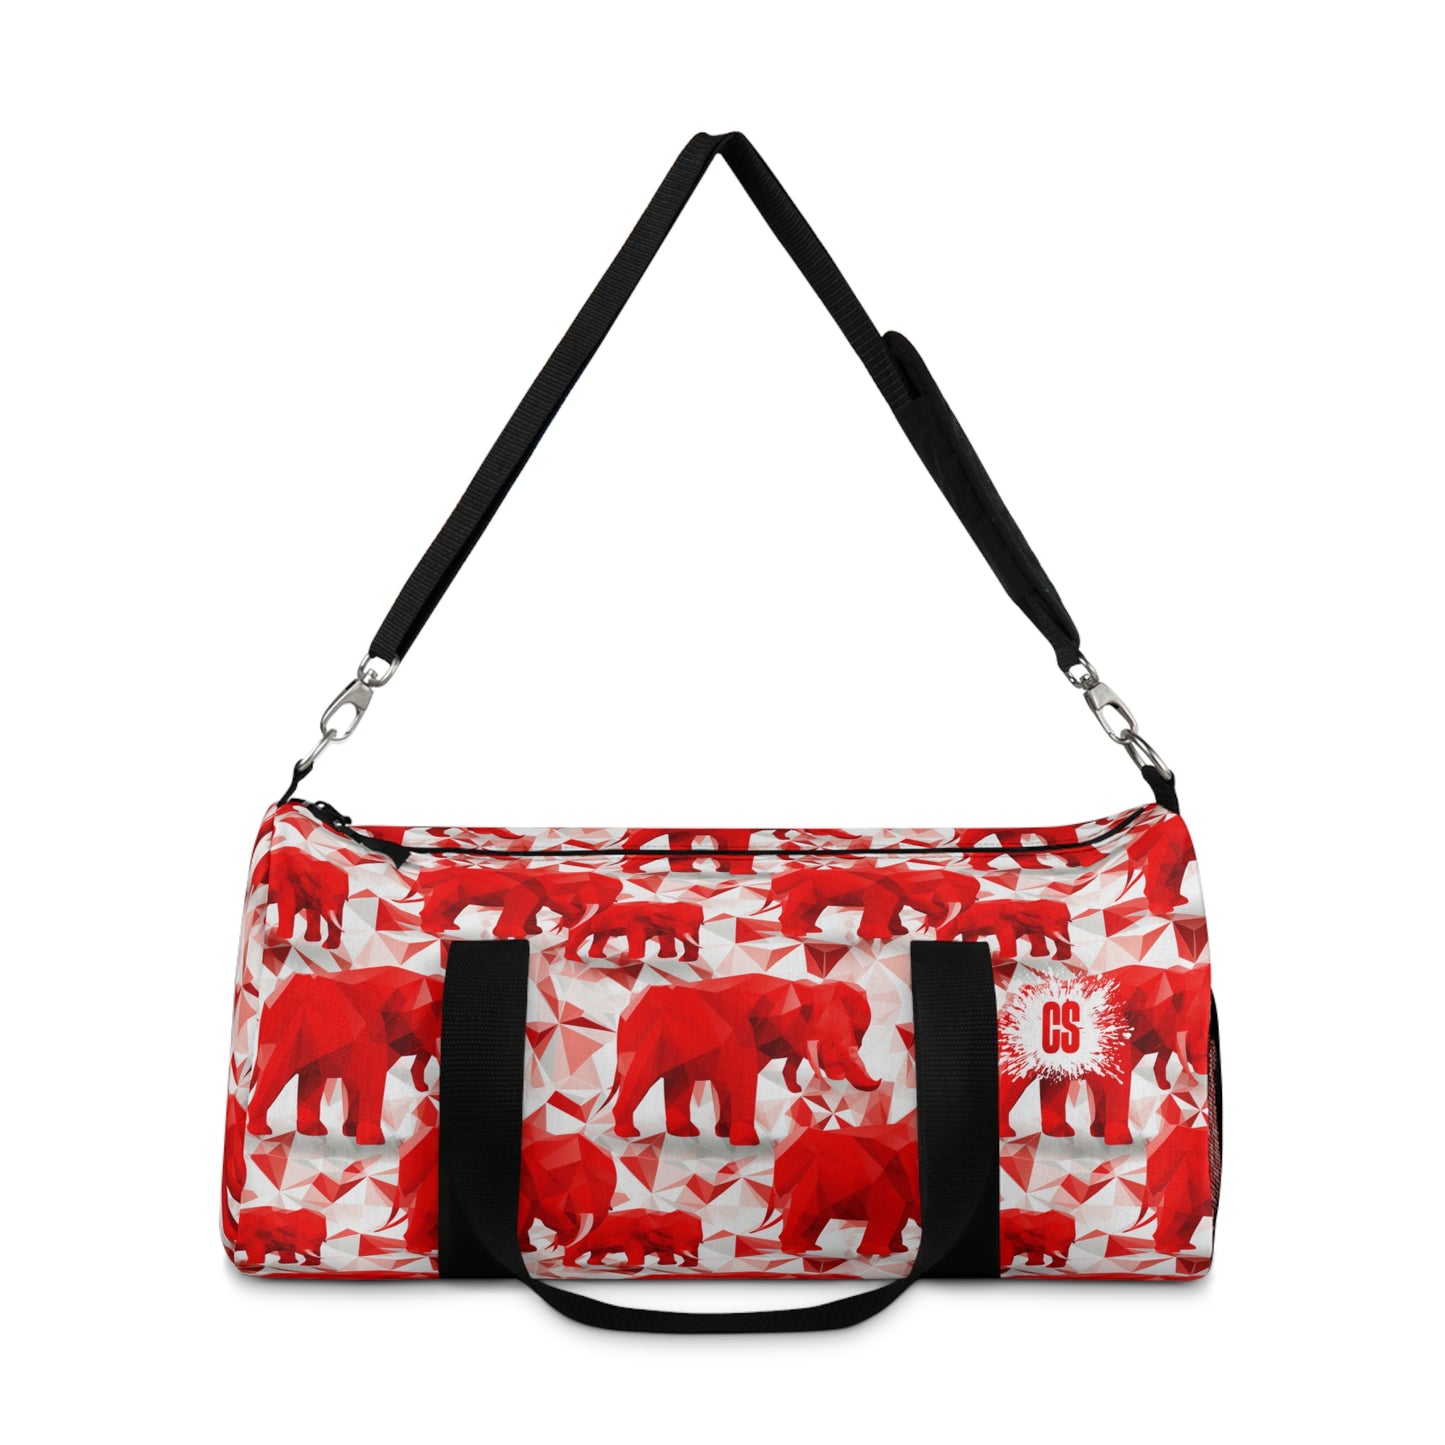 Elephants & Pyramids Duffel Bag